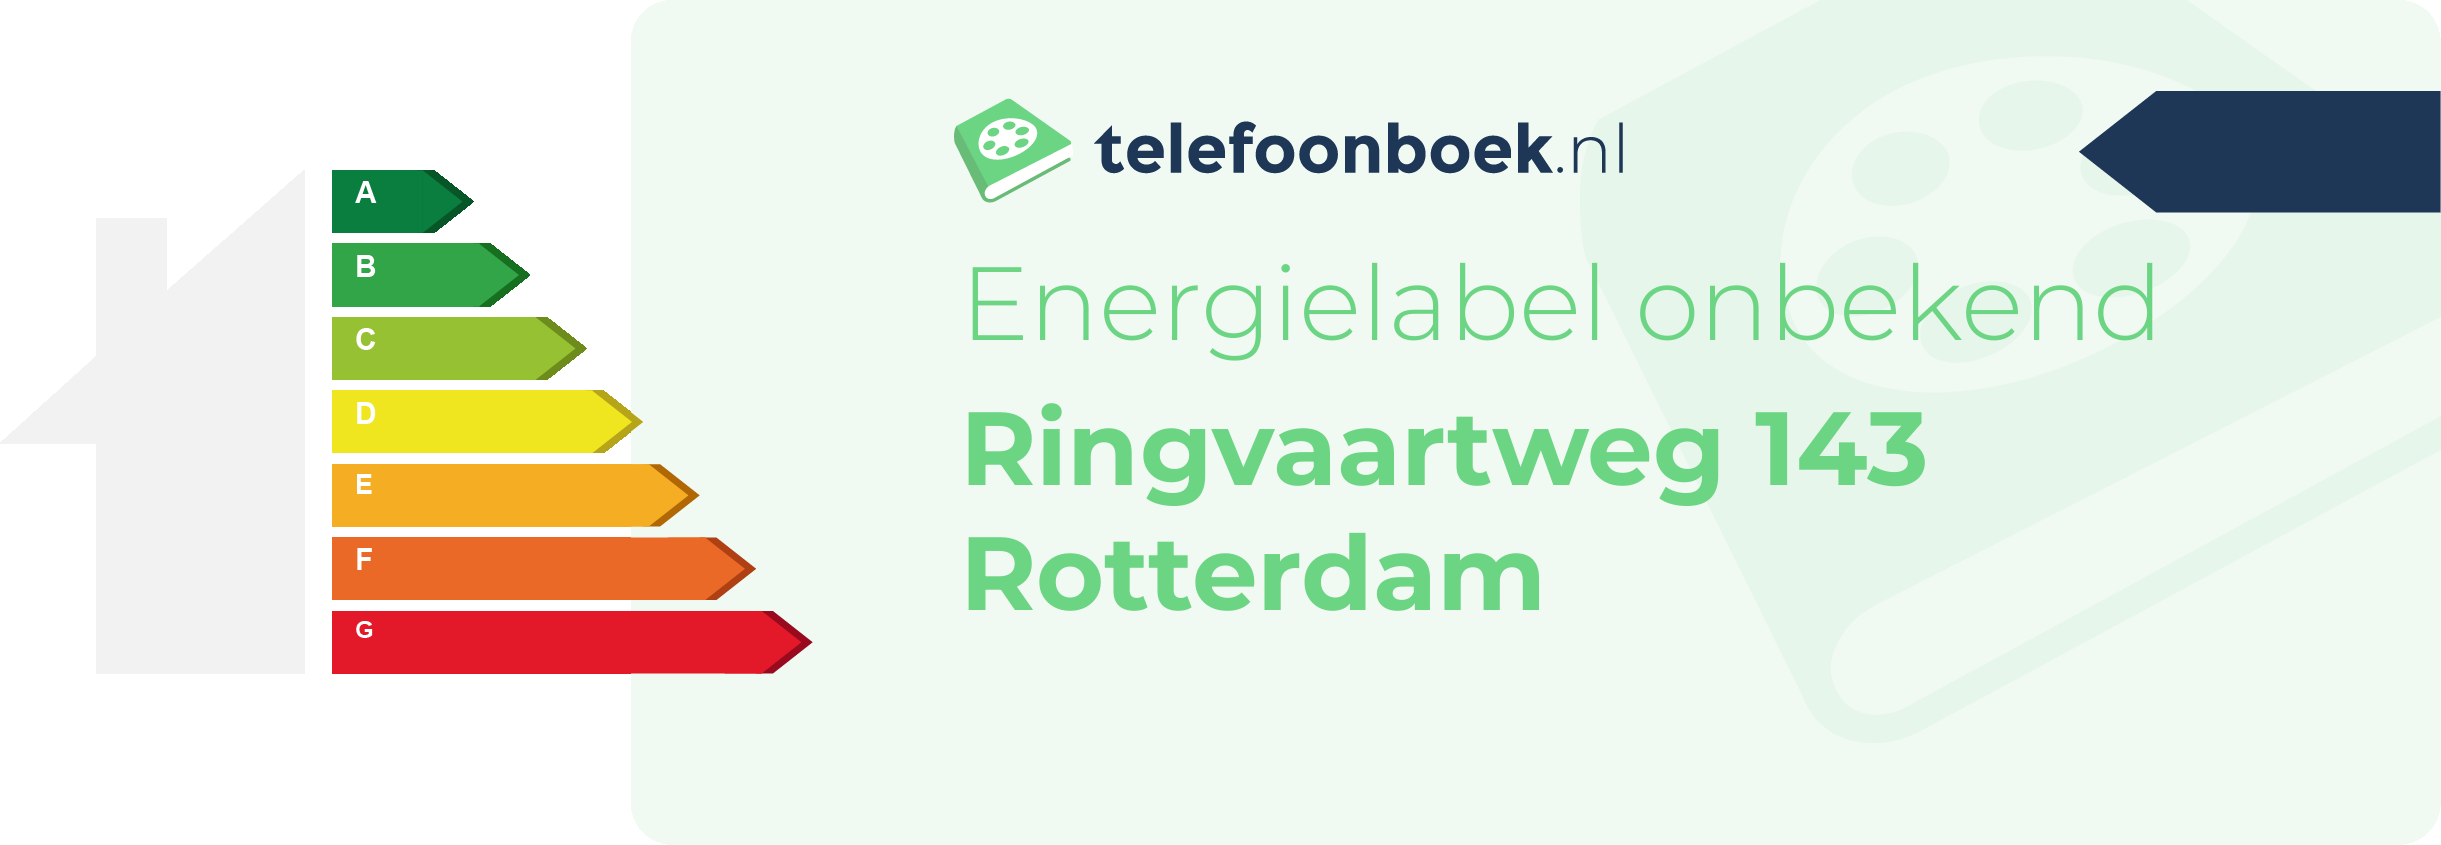 Energielabel Ringvaartweg 143 Rotterdam